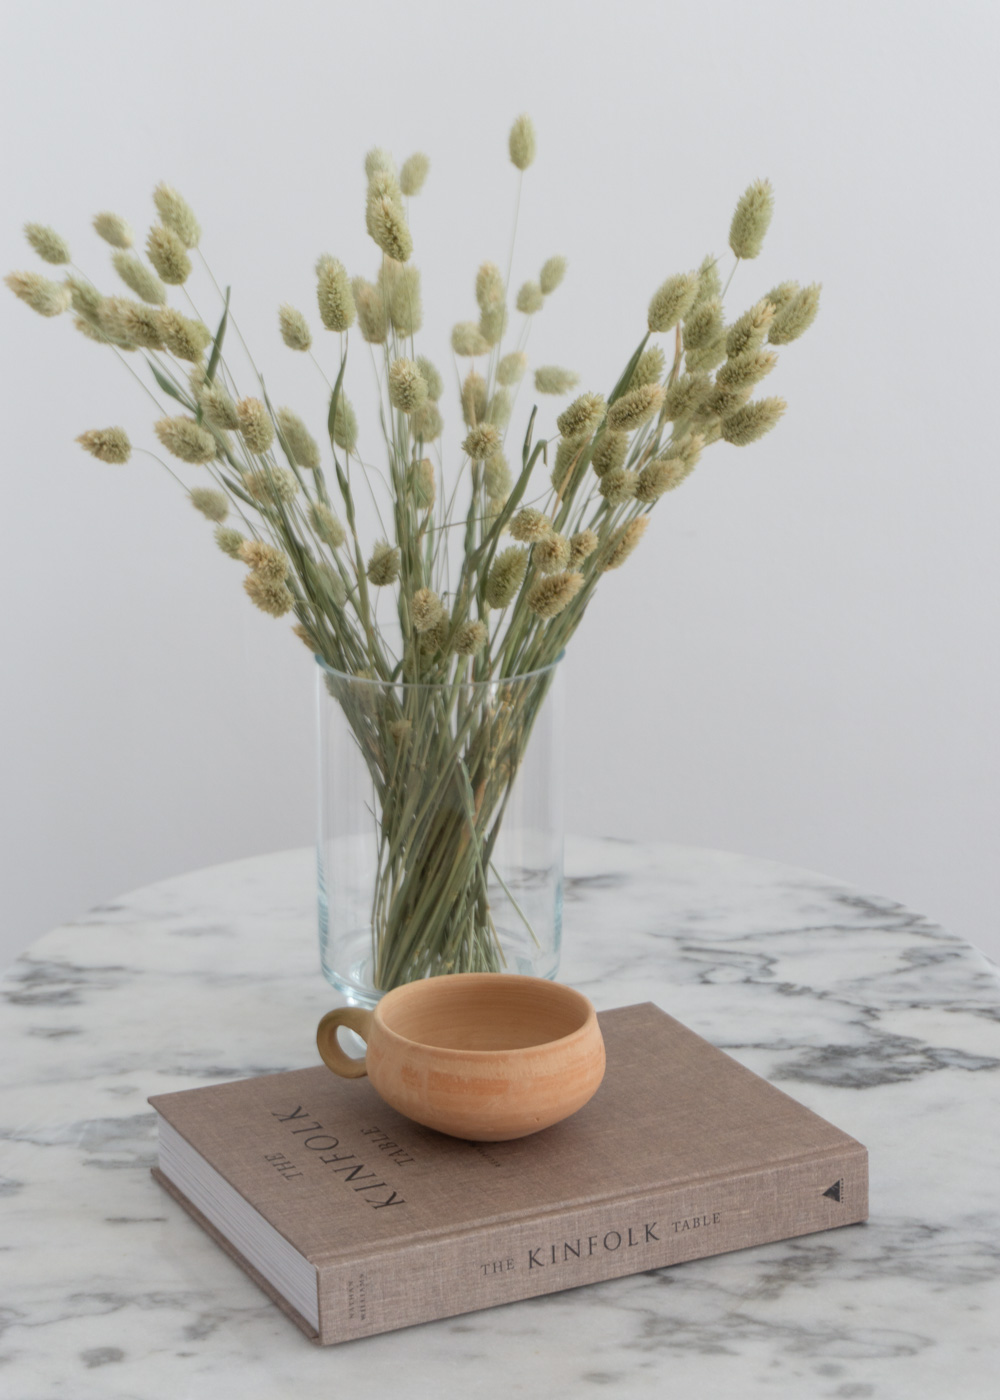 Kinfolk Cookbook, Dried Flowers | neutral interior, white and beige home, wood floors, minimalist simple decor, natural berlin apartment, scandinavian design, calm aesthetic